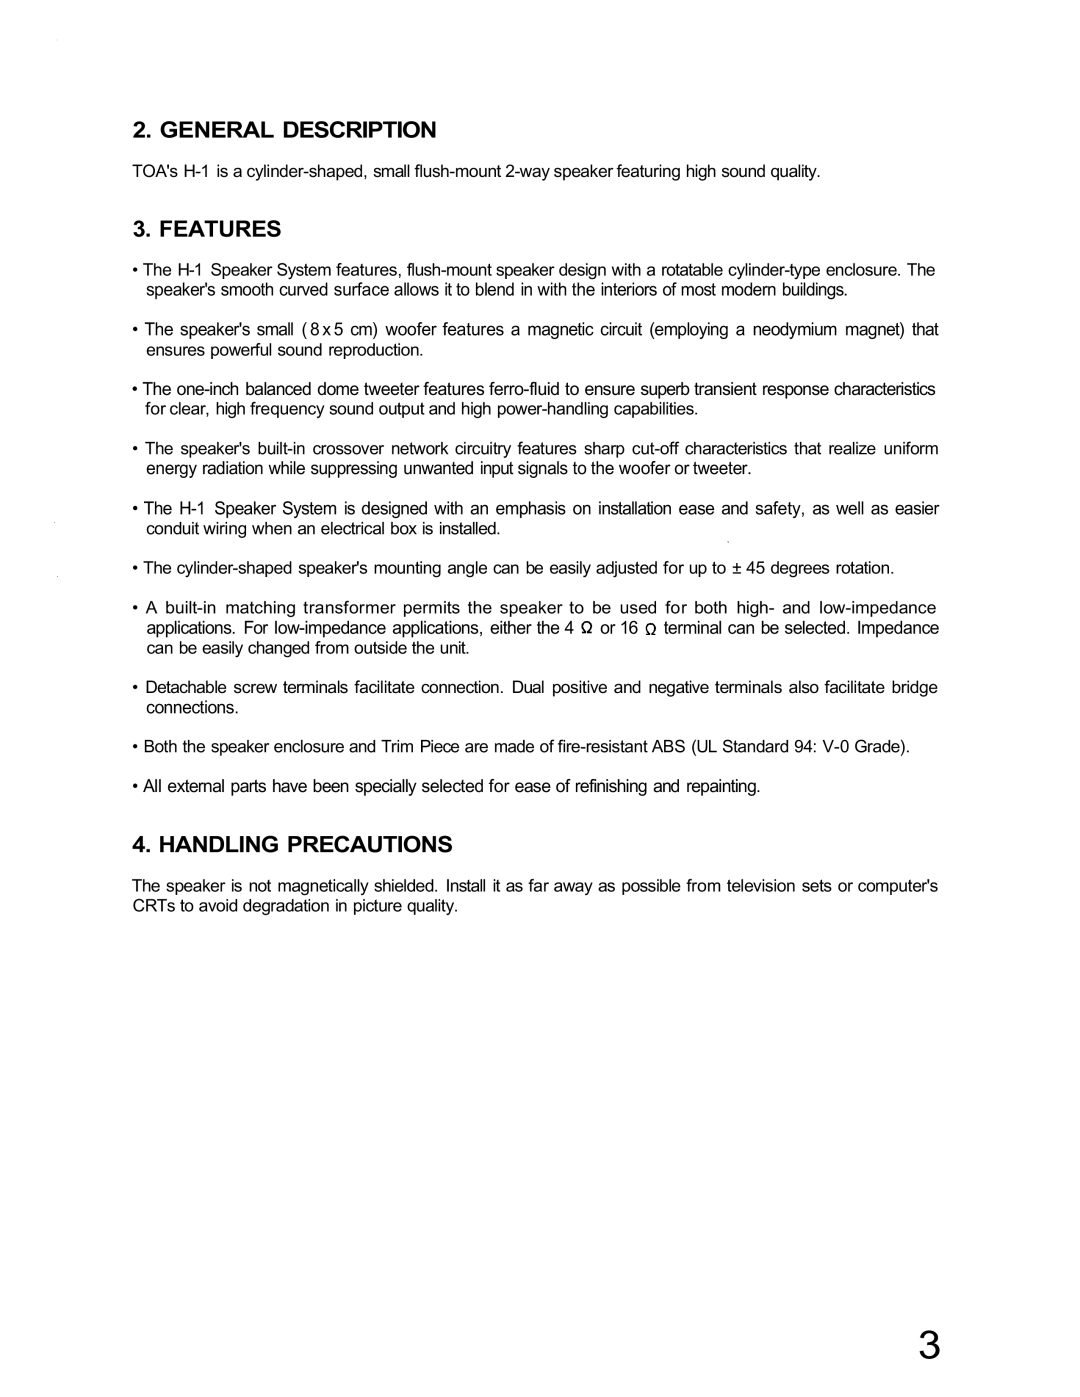 TOA Electronics H-1 specifications General Description, Features, Handling Precautions 